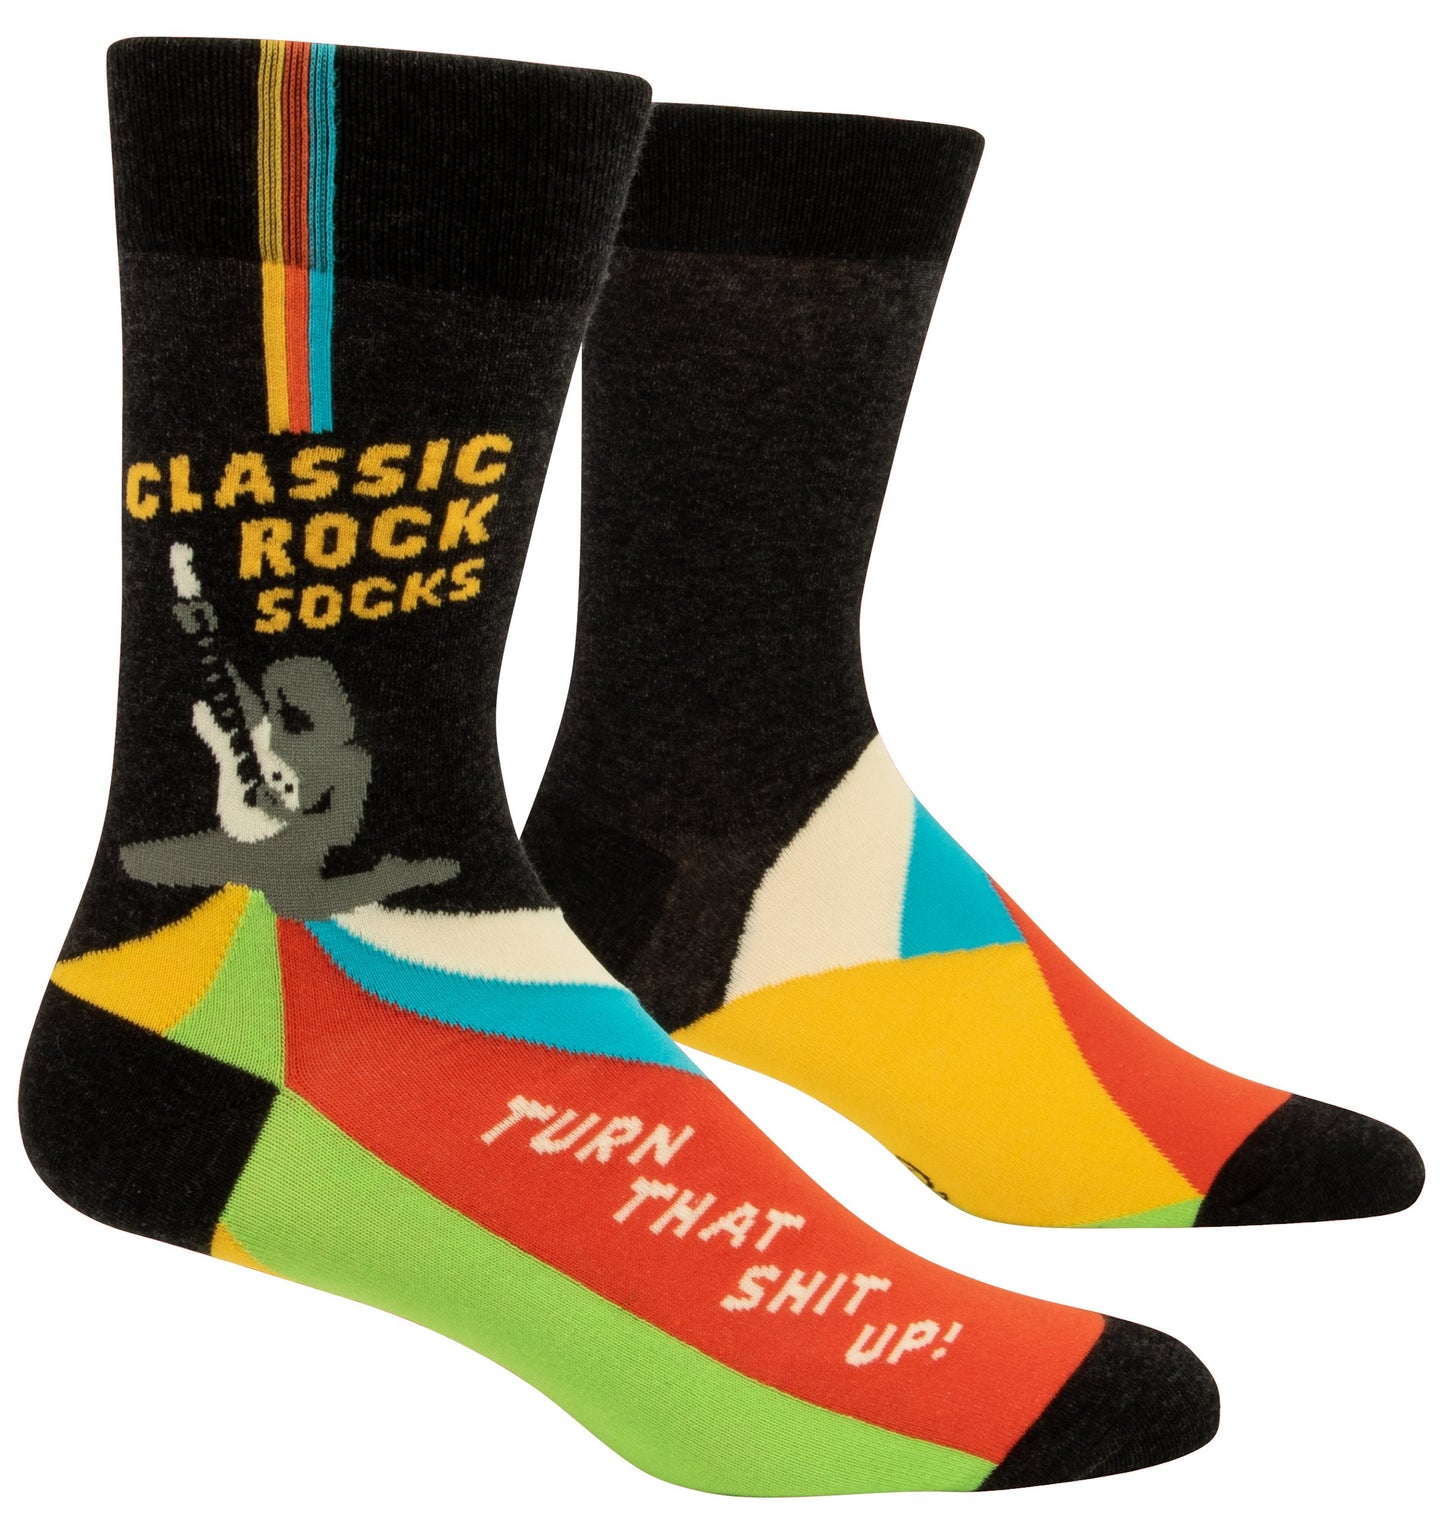 Blue Q - Men's Crew Socks - Classic Rock Socks